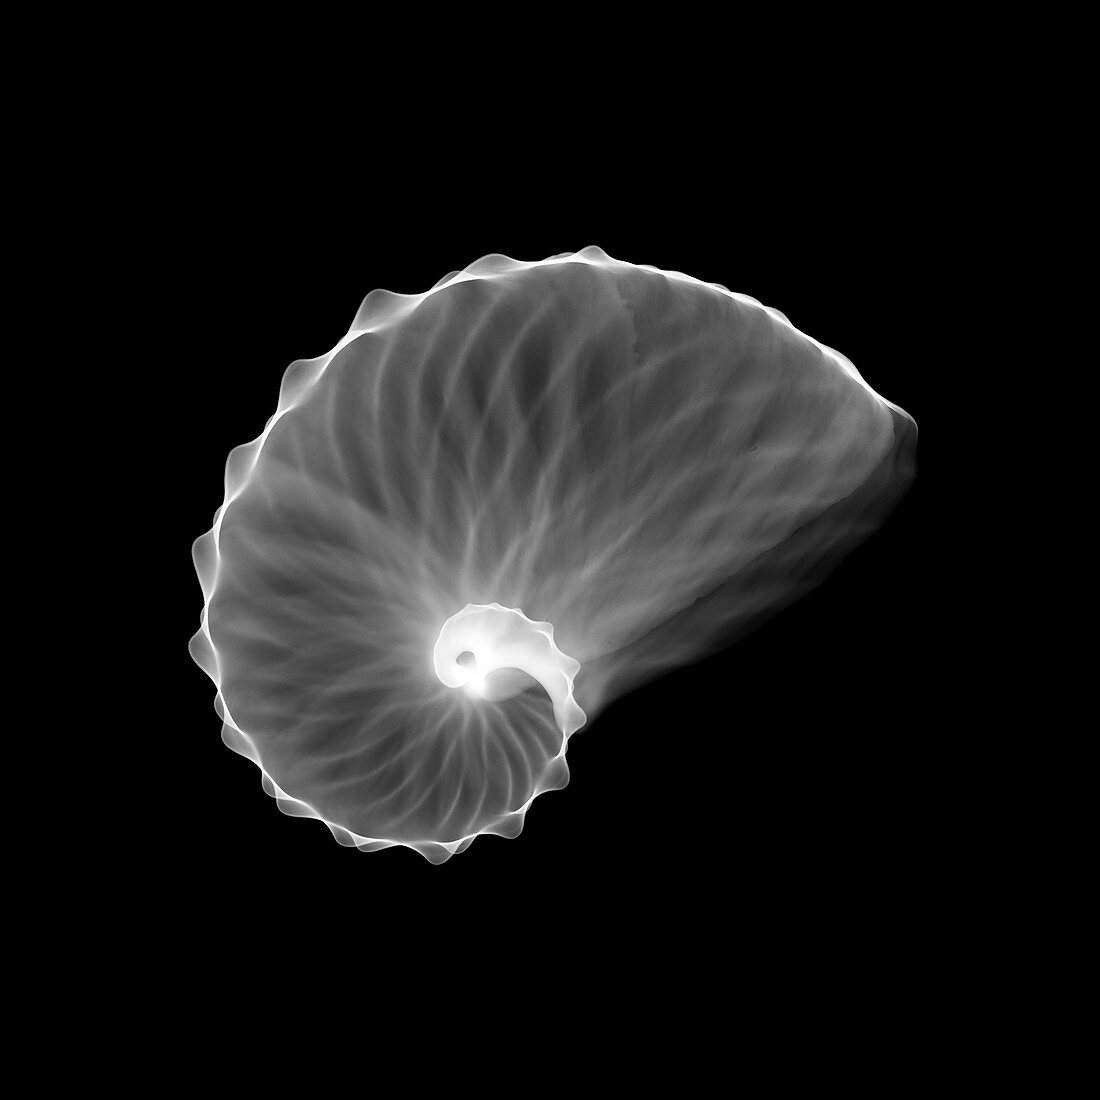 Nautilus shell, X-ray